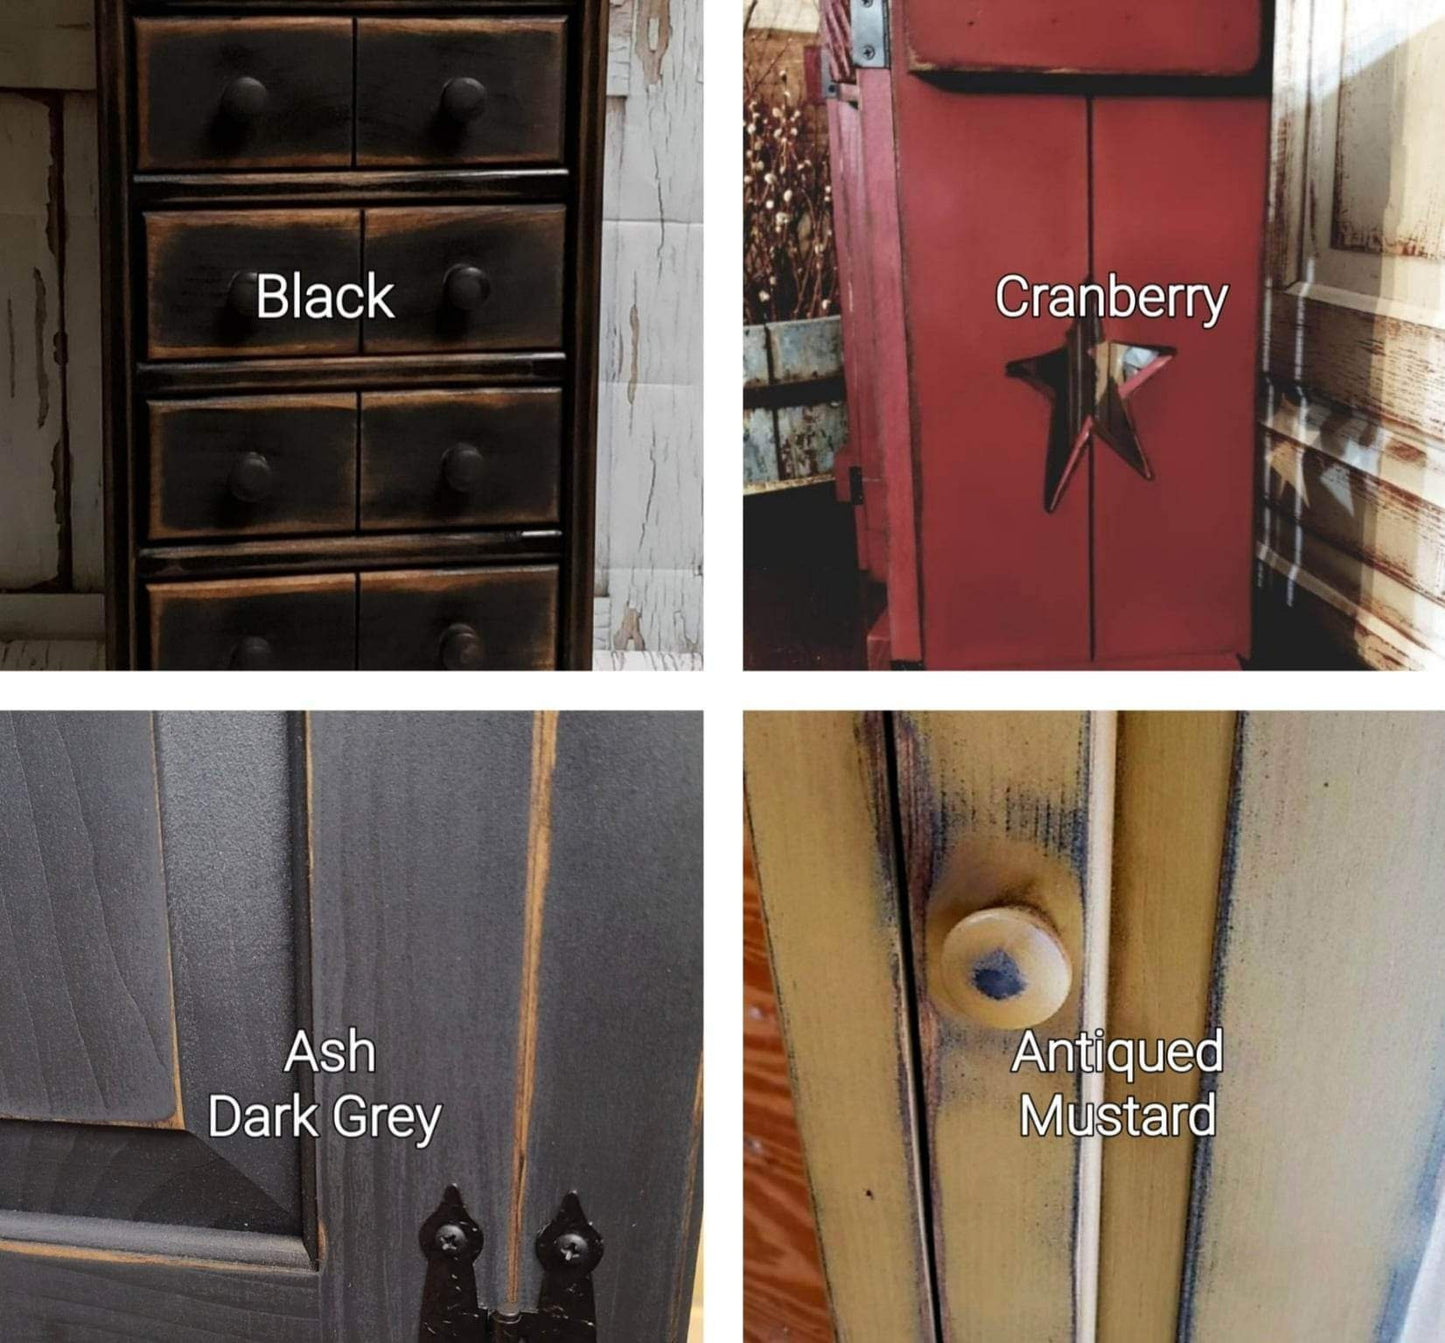 Handmade Rustic Corner Hutch, Solid Wood Display Cabinet, Farmhouse Storage, Rustic Furniture, Farmhouse Decor